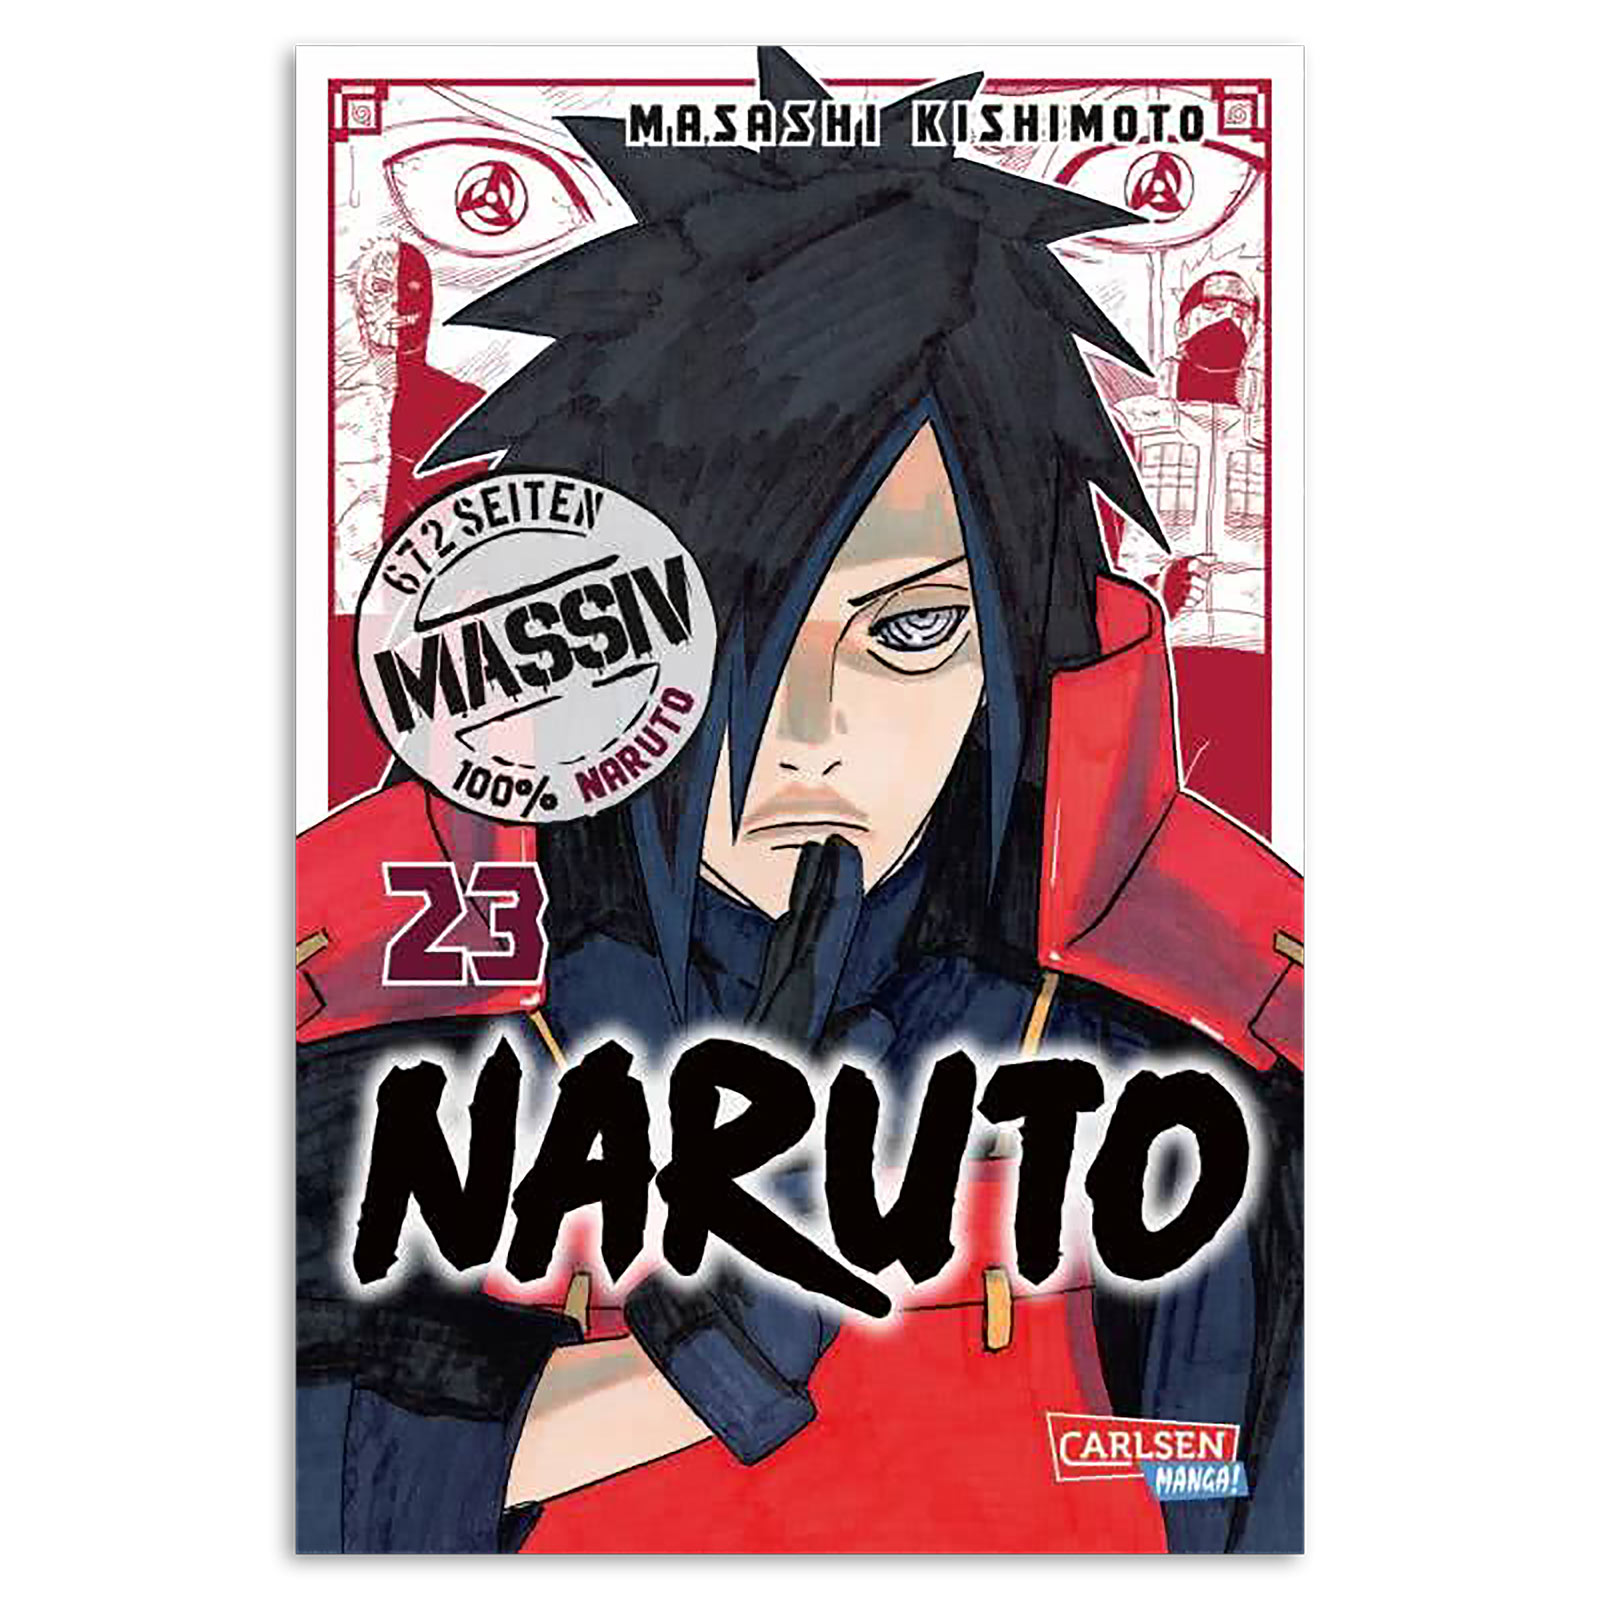 Naruto - Collection Volume 23 Paperback